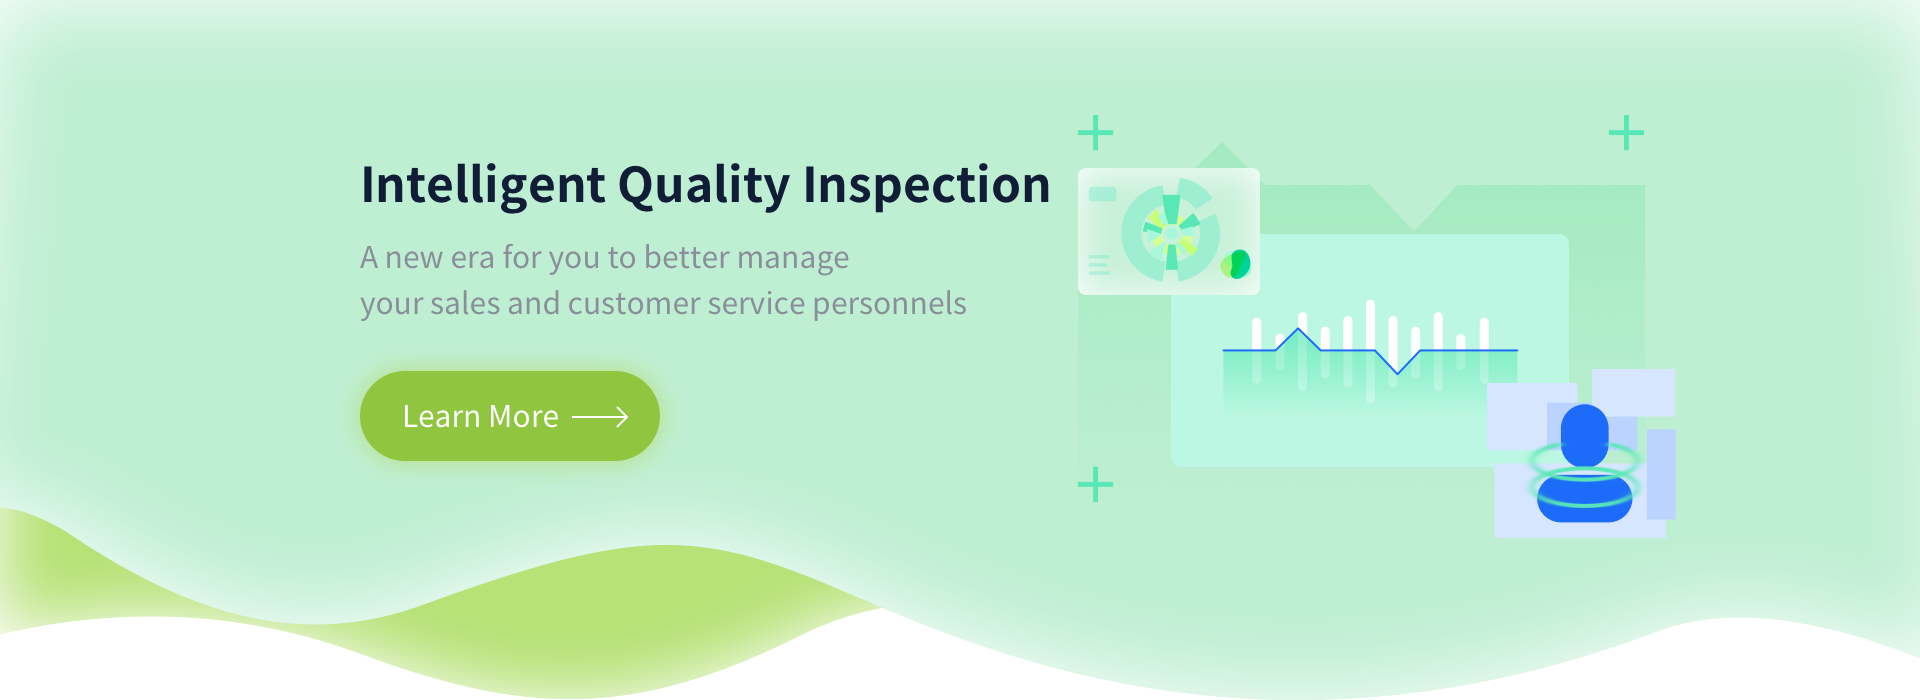 Intelligent quality inspection